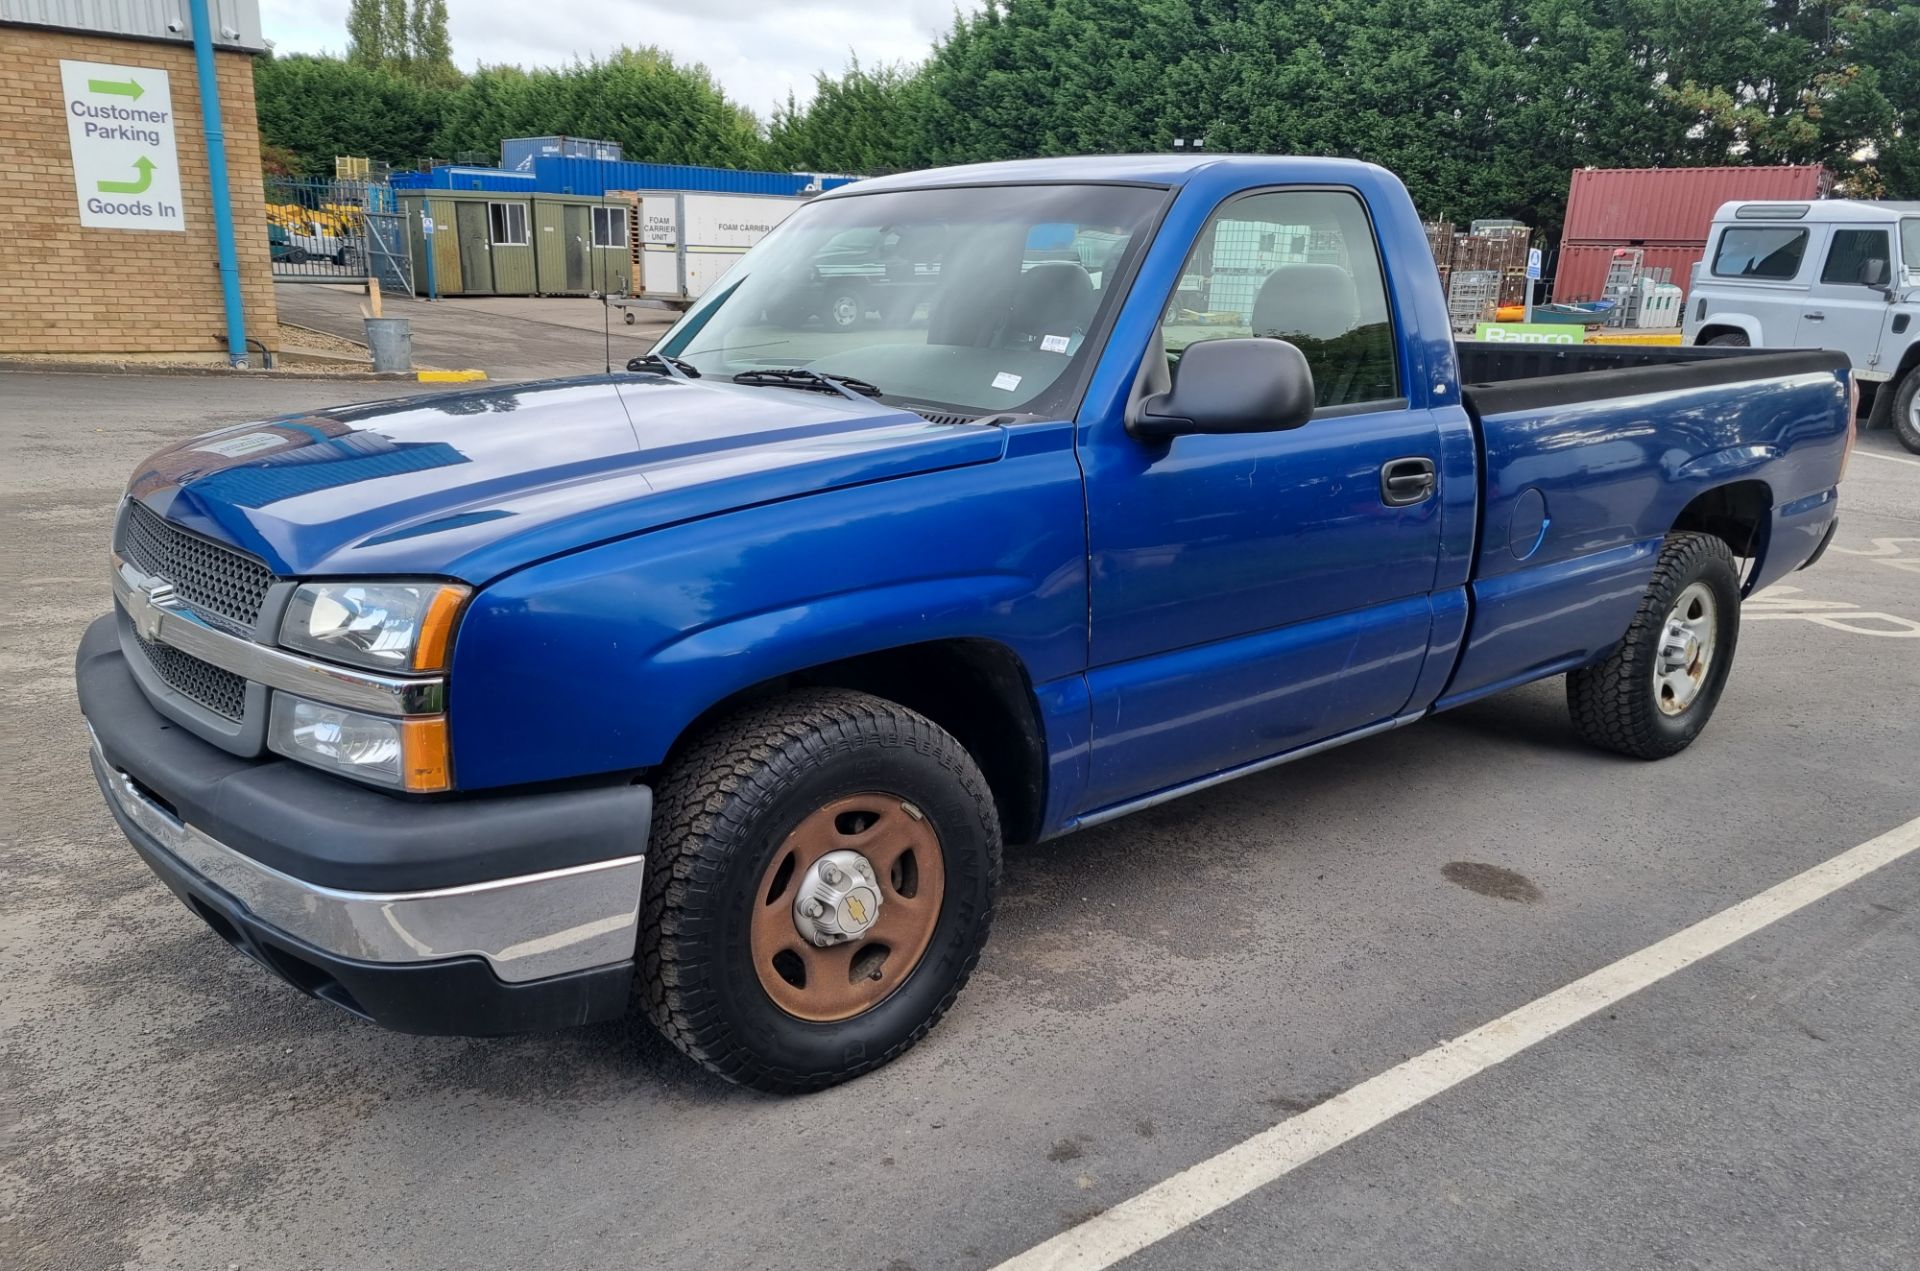 Chevrolet Silverado - 2003 - 5.3LS - 2-door pickup truck - automatic - Blue - 162095km - 2WD - Image 2 of 27